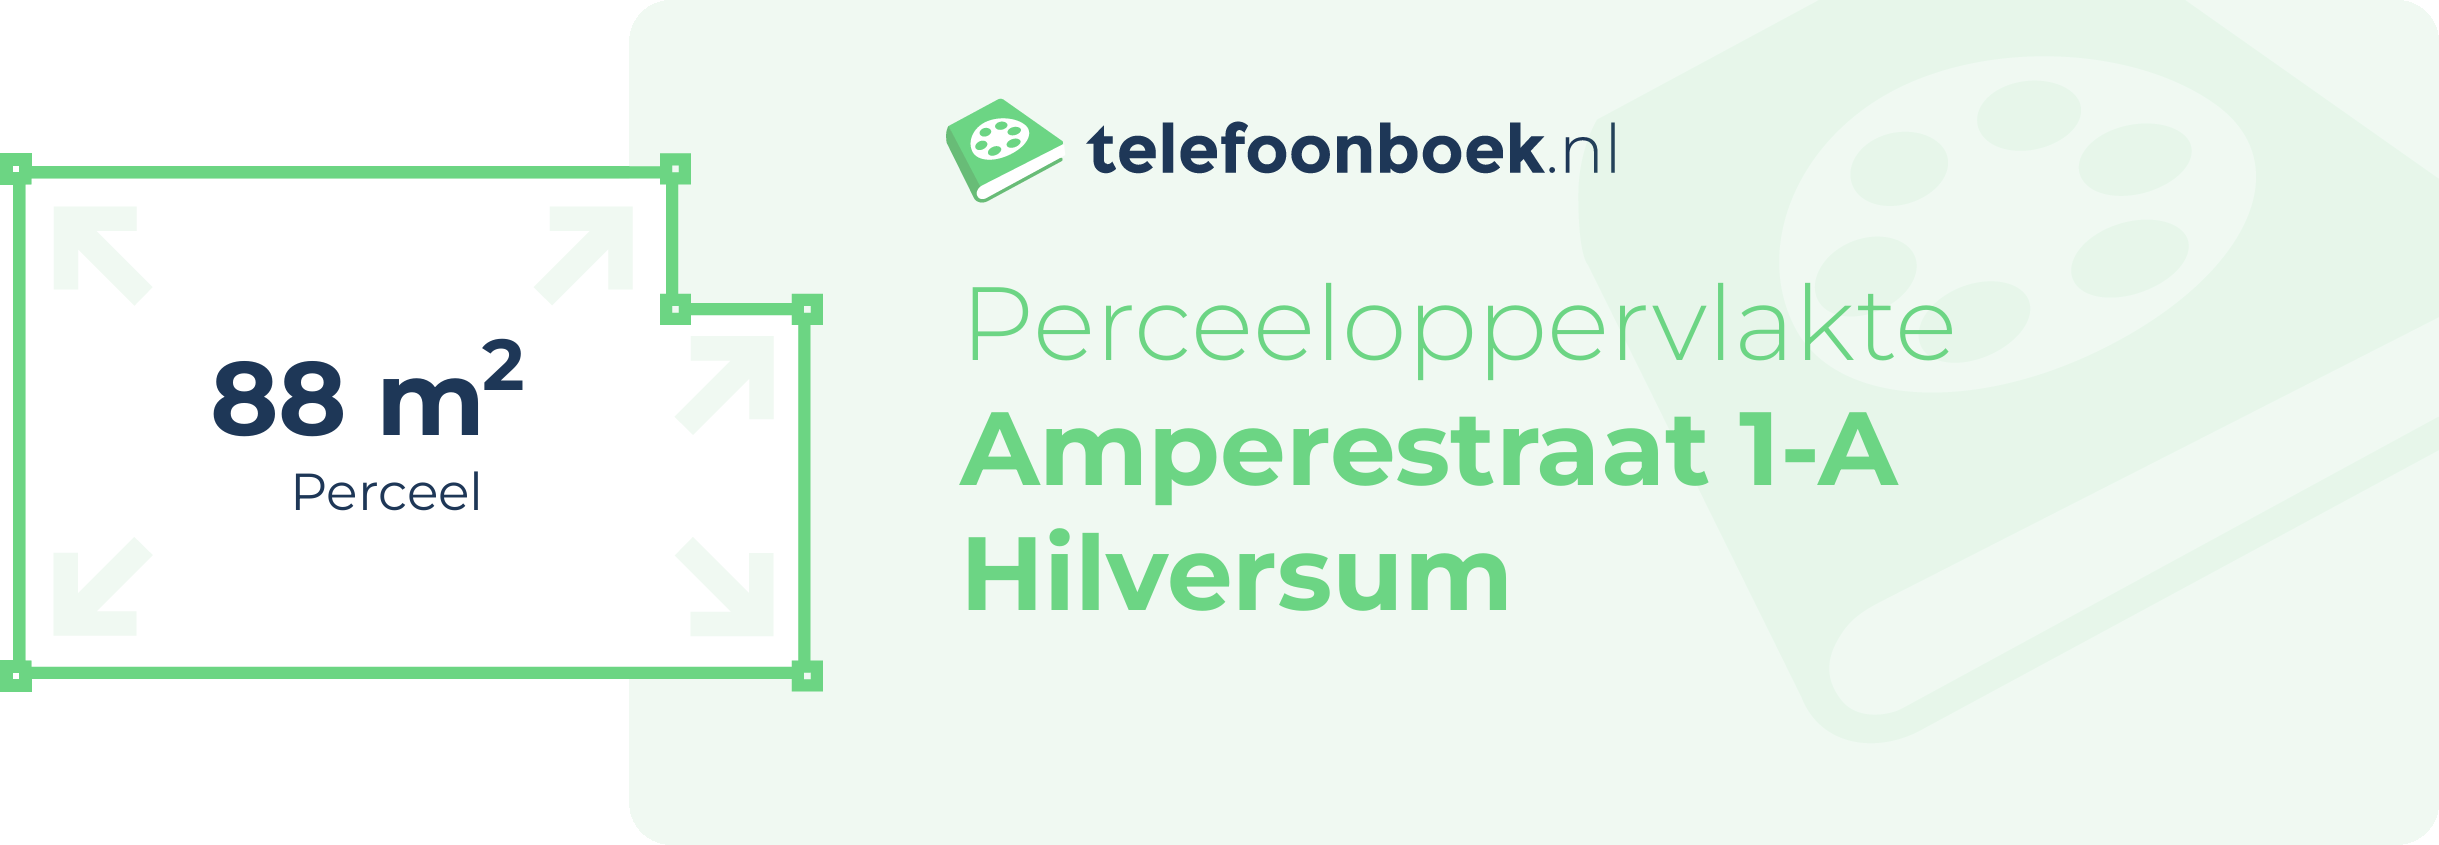 Perceeloppervlakte Amperestraat 1-A Hilversum